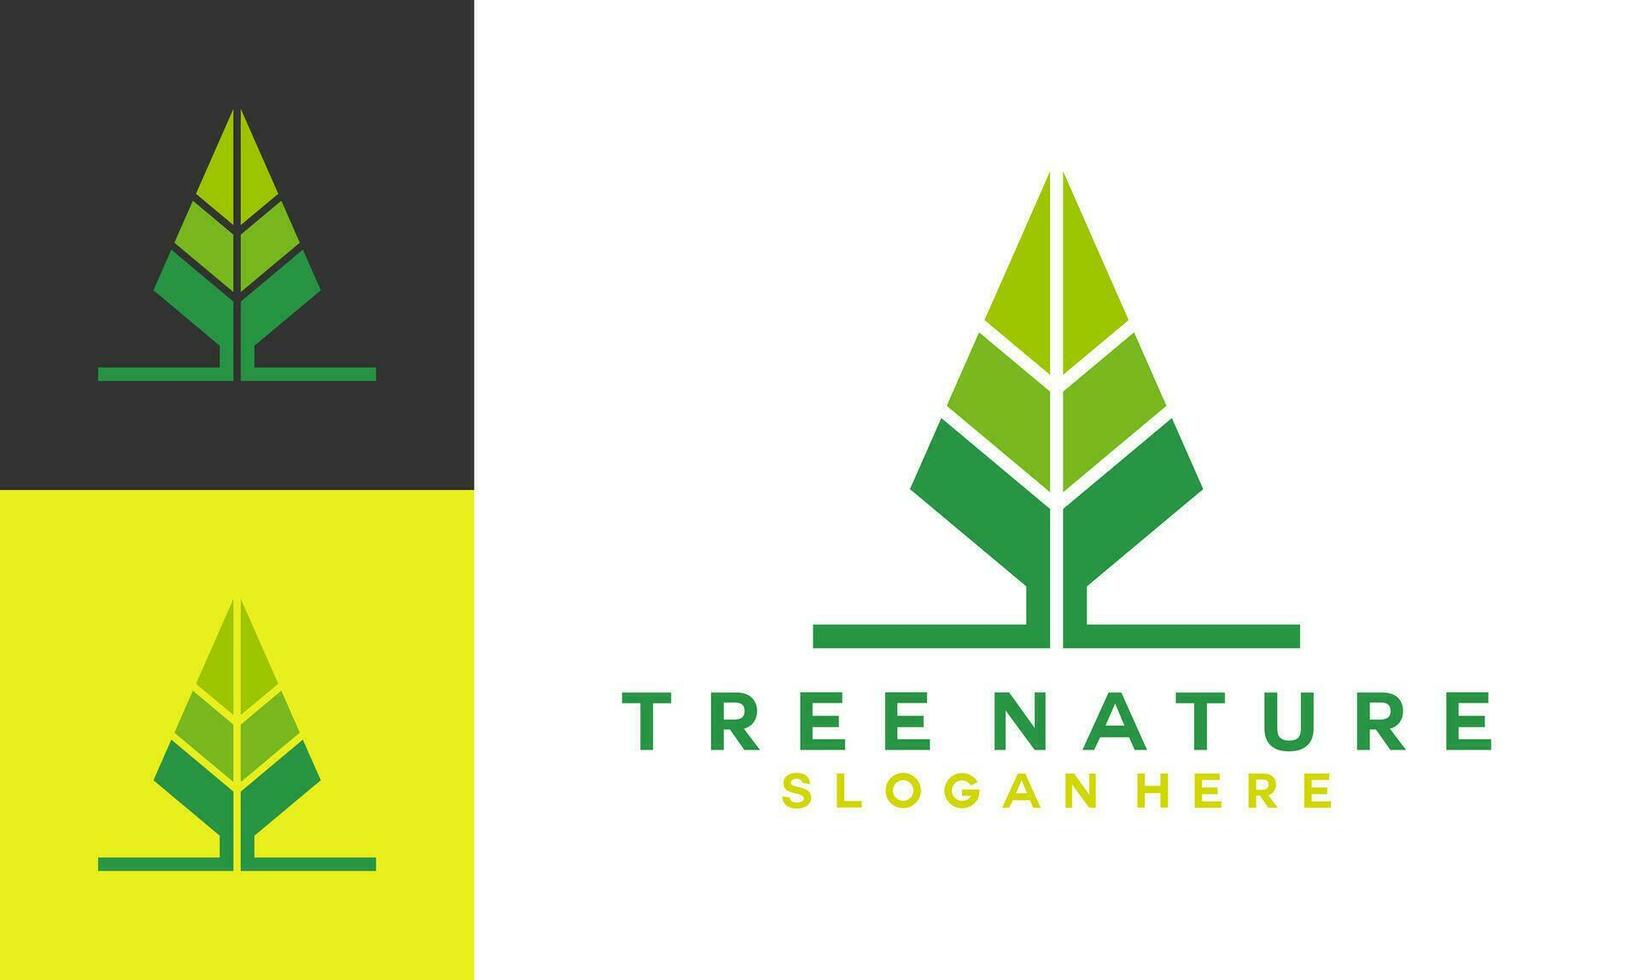 abctract tree nature logo vektor. tree icon logo illustration. vector